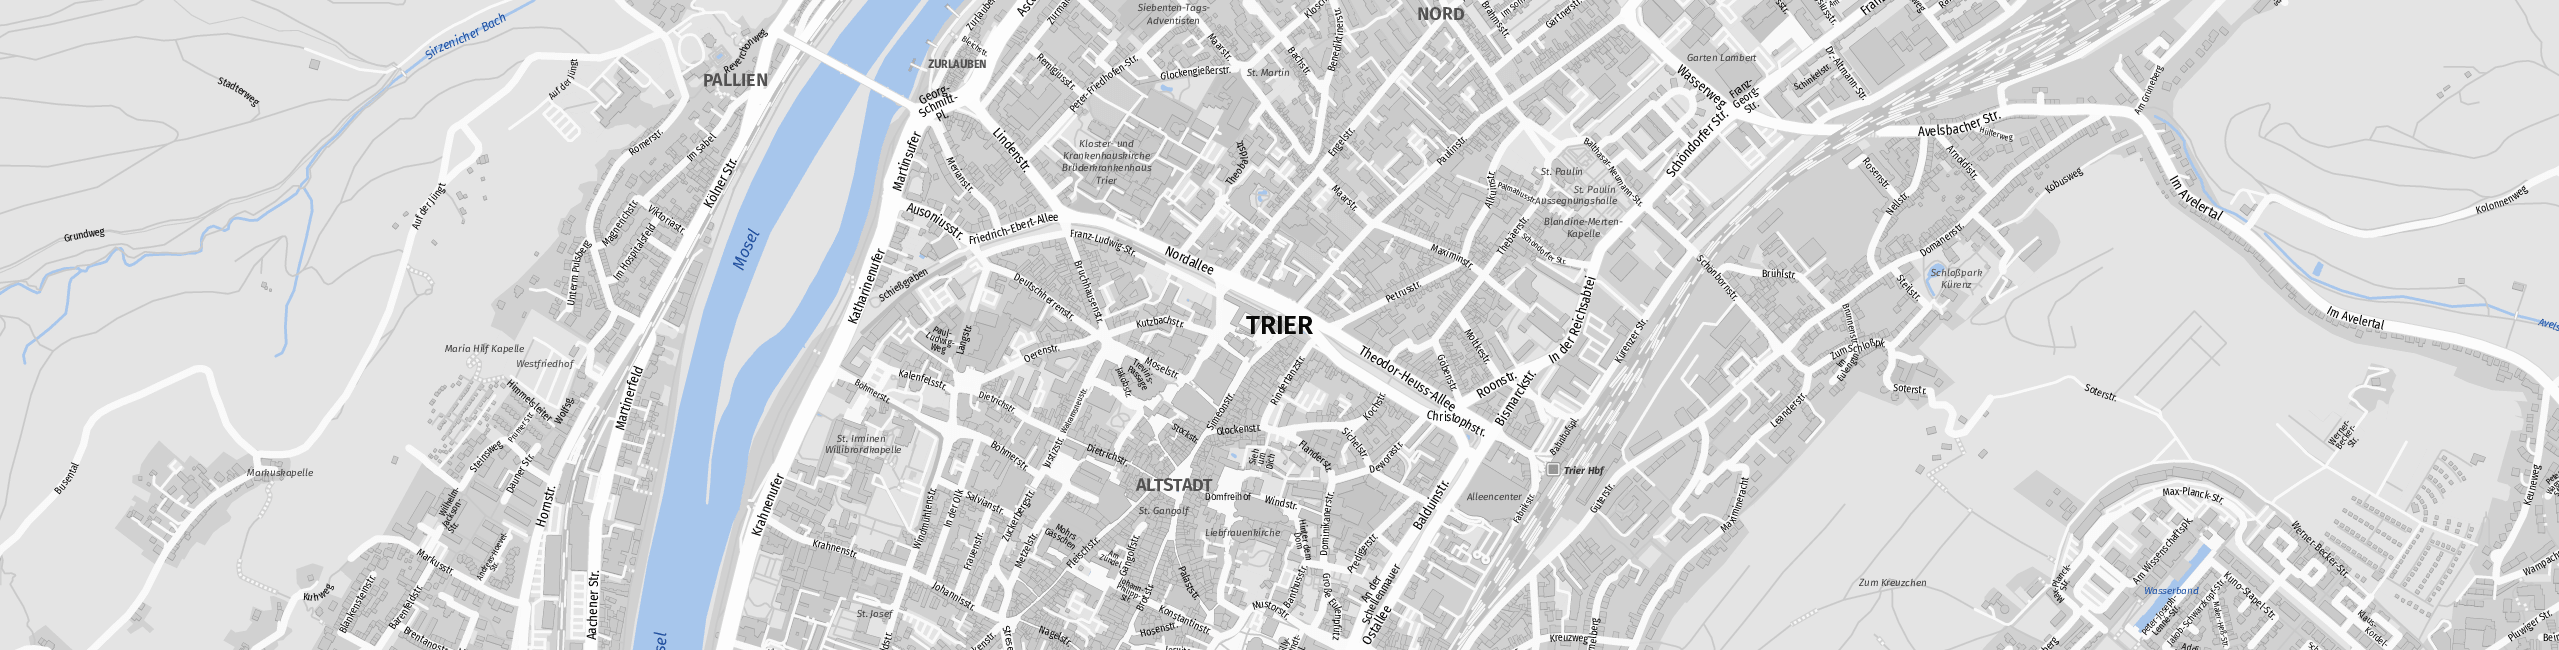 Stadtplan Trier zum Downloaden.